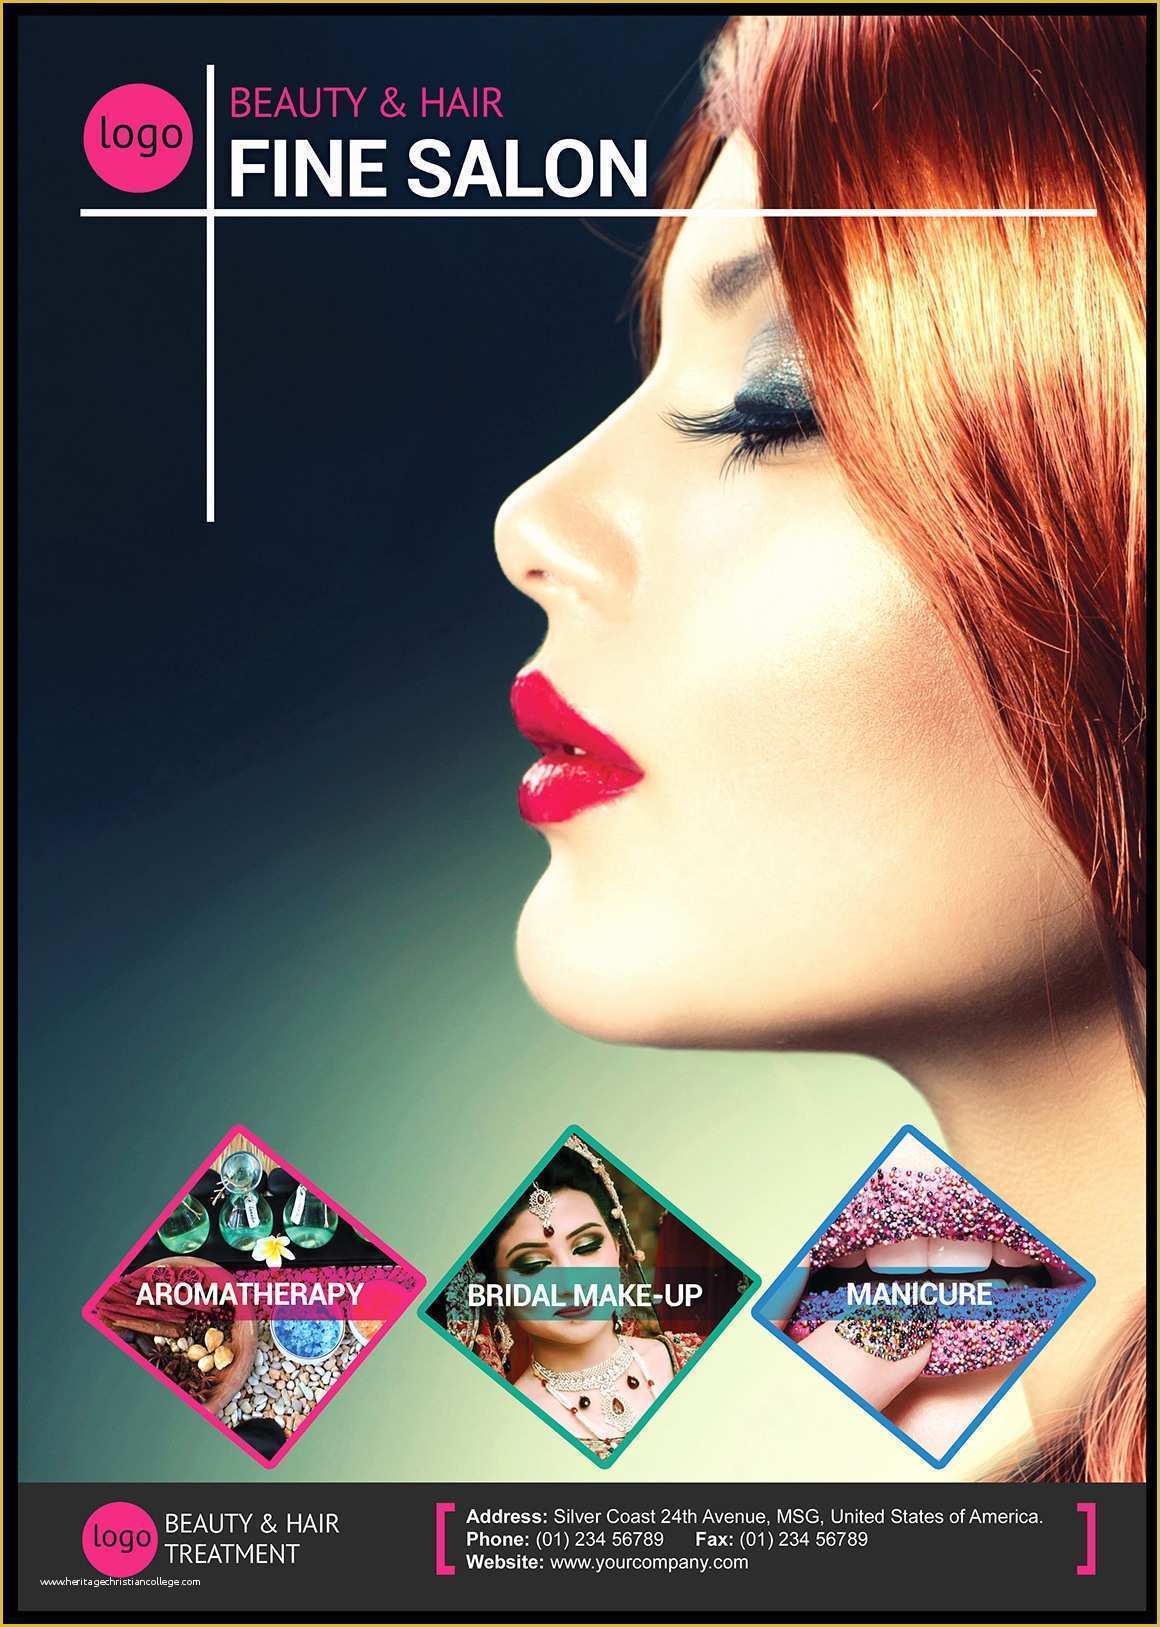 Beauty Salon Flyer Templates Psd Free Download Of Beauty and Hair Salon Flyer Flyer Templates On Creative